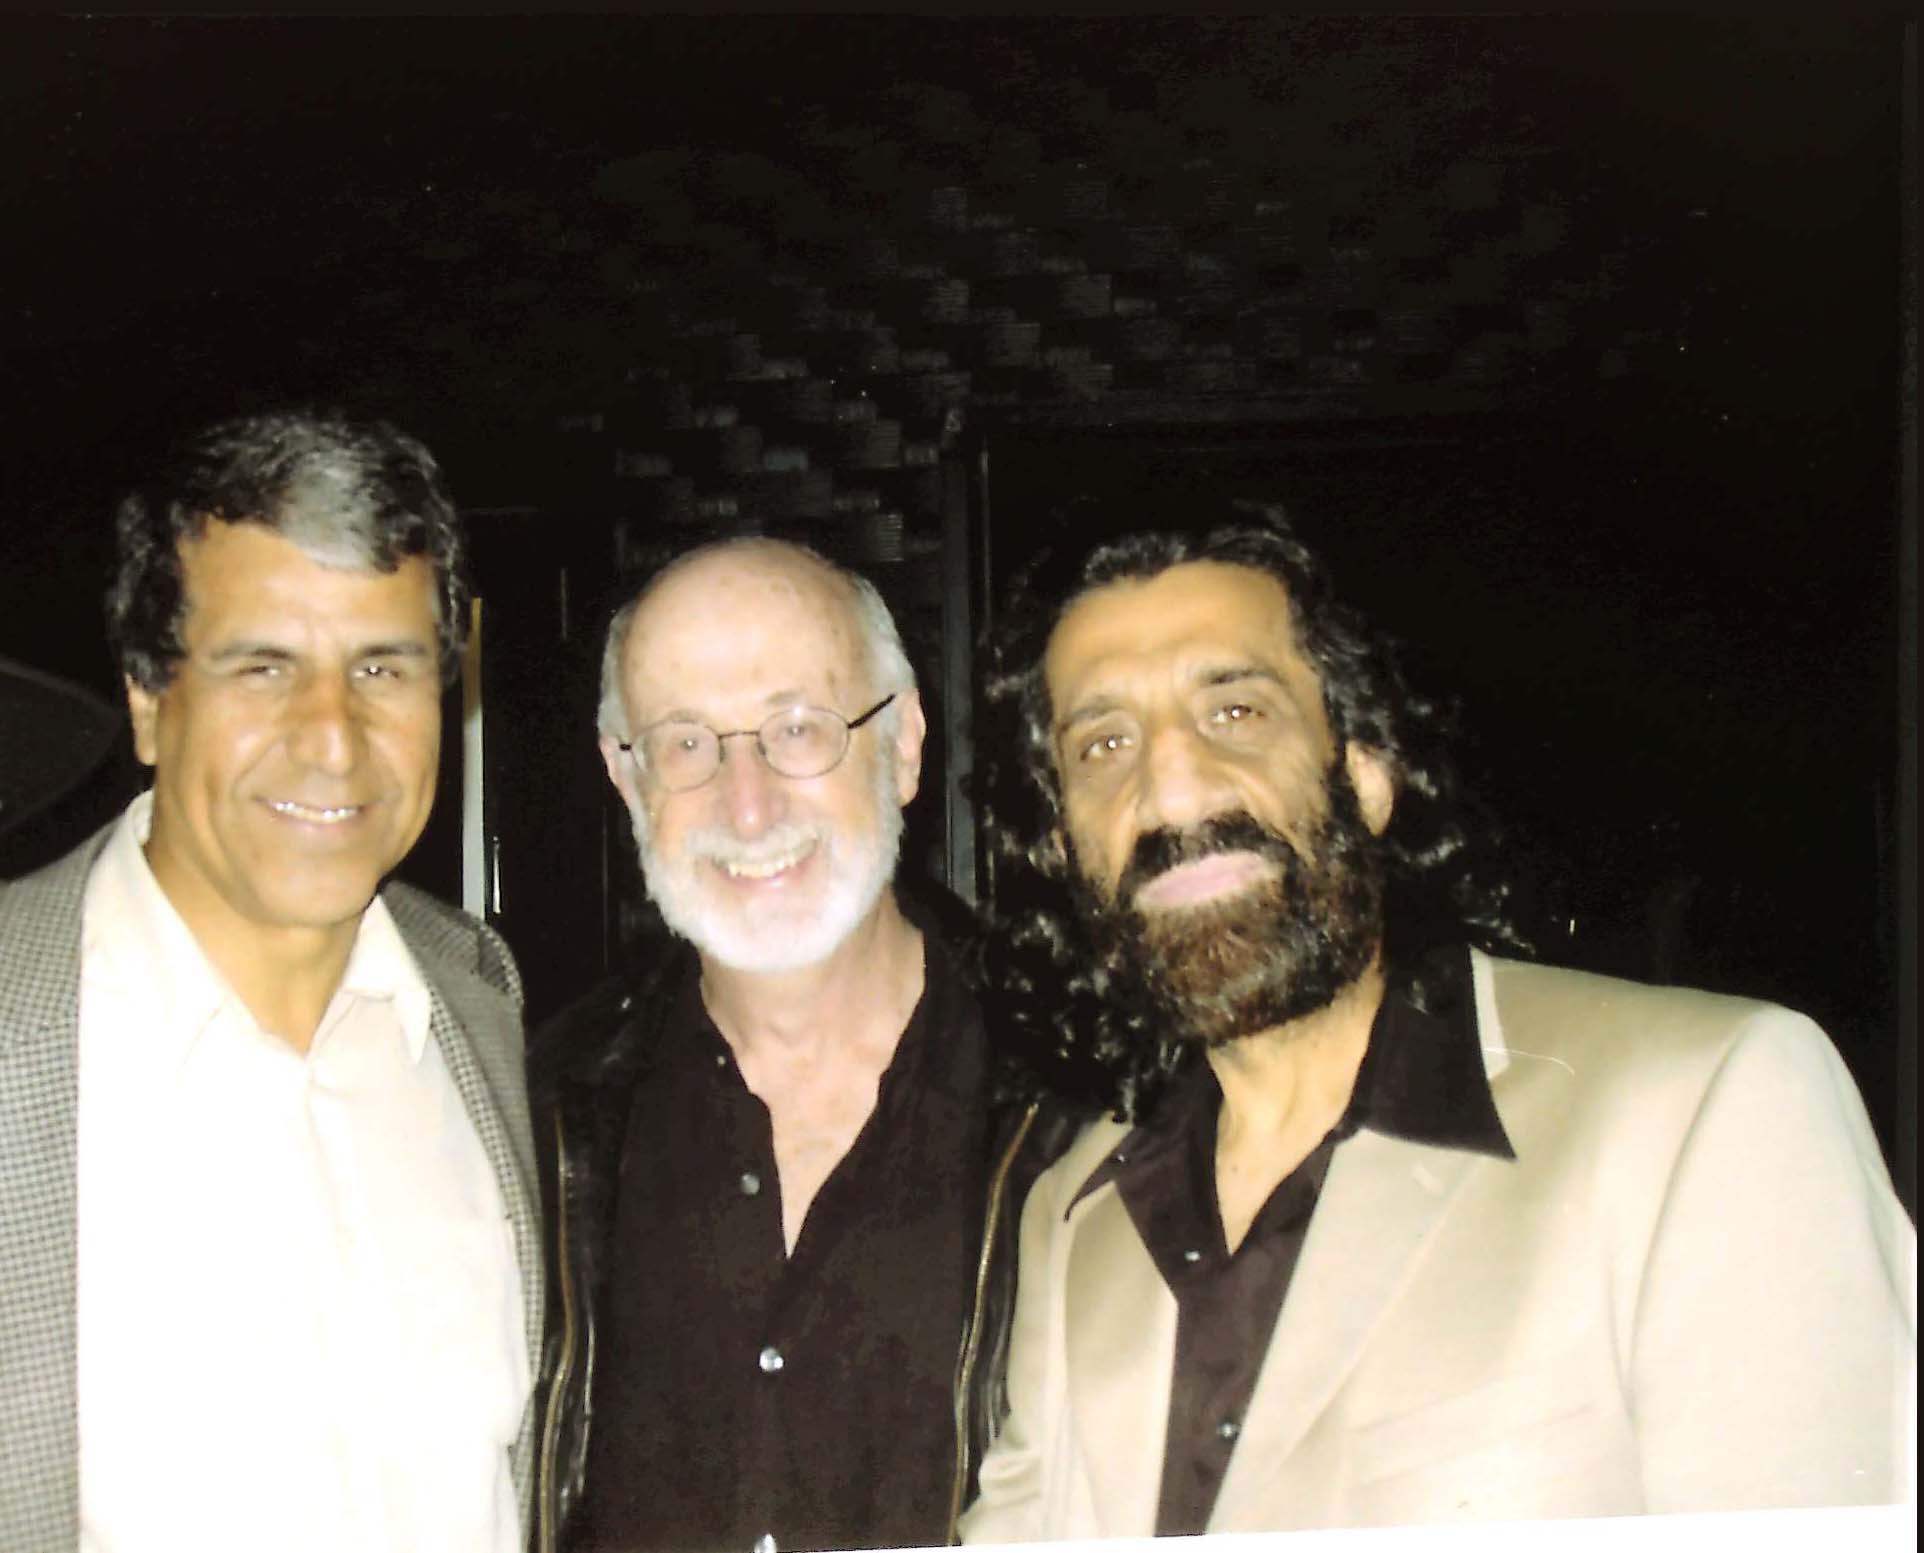 Enayat with Stephen Goldblatt and Salam Sangi